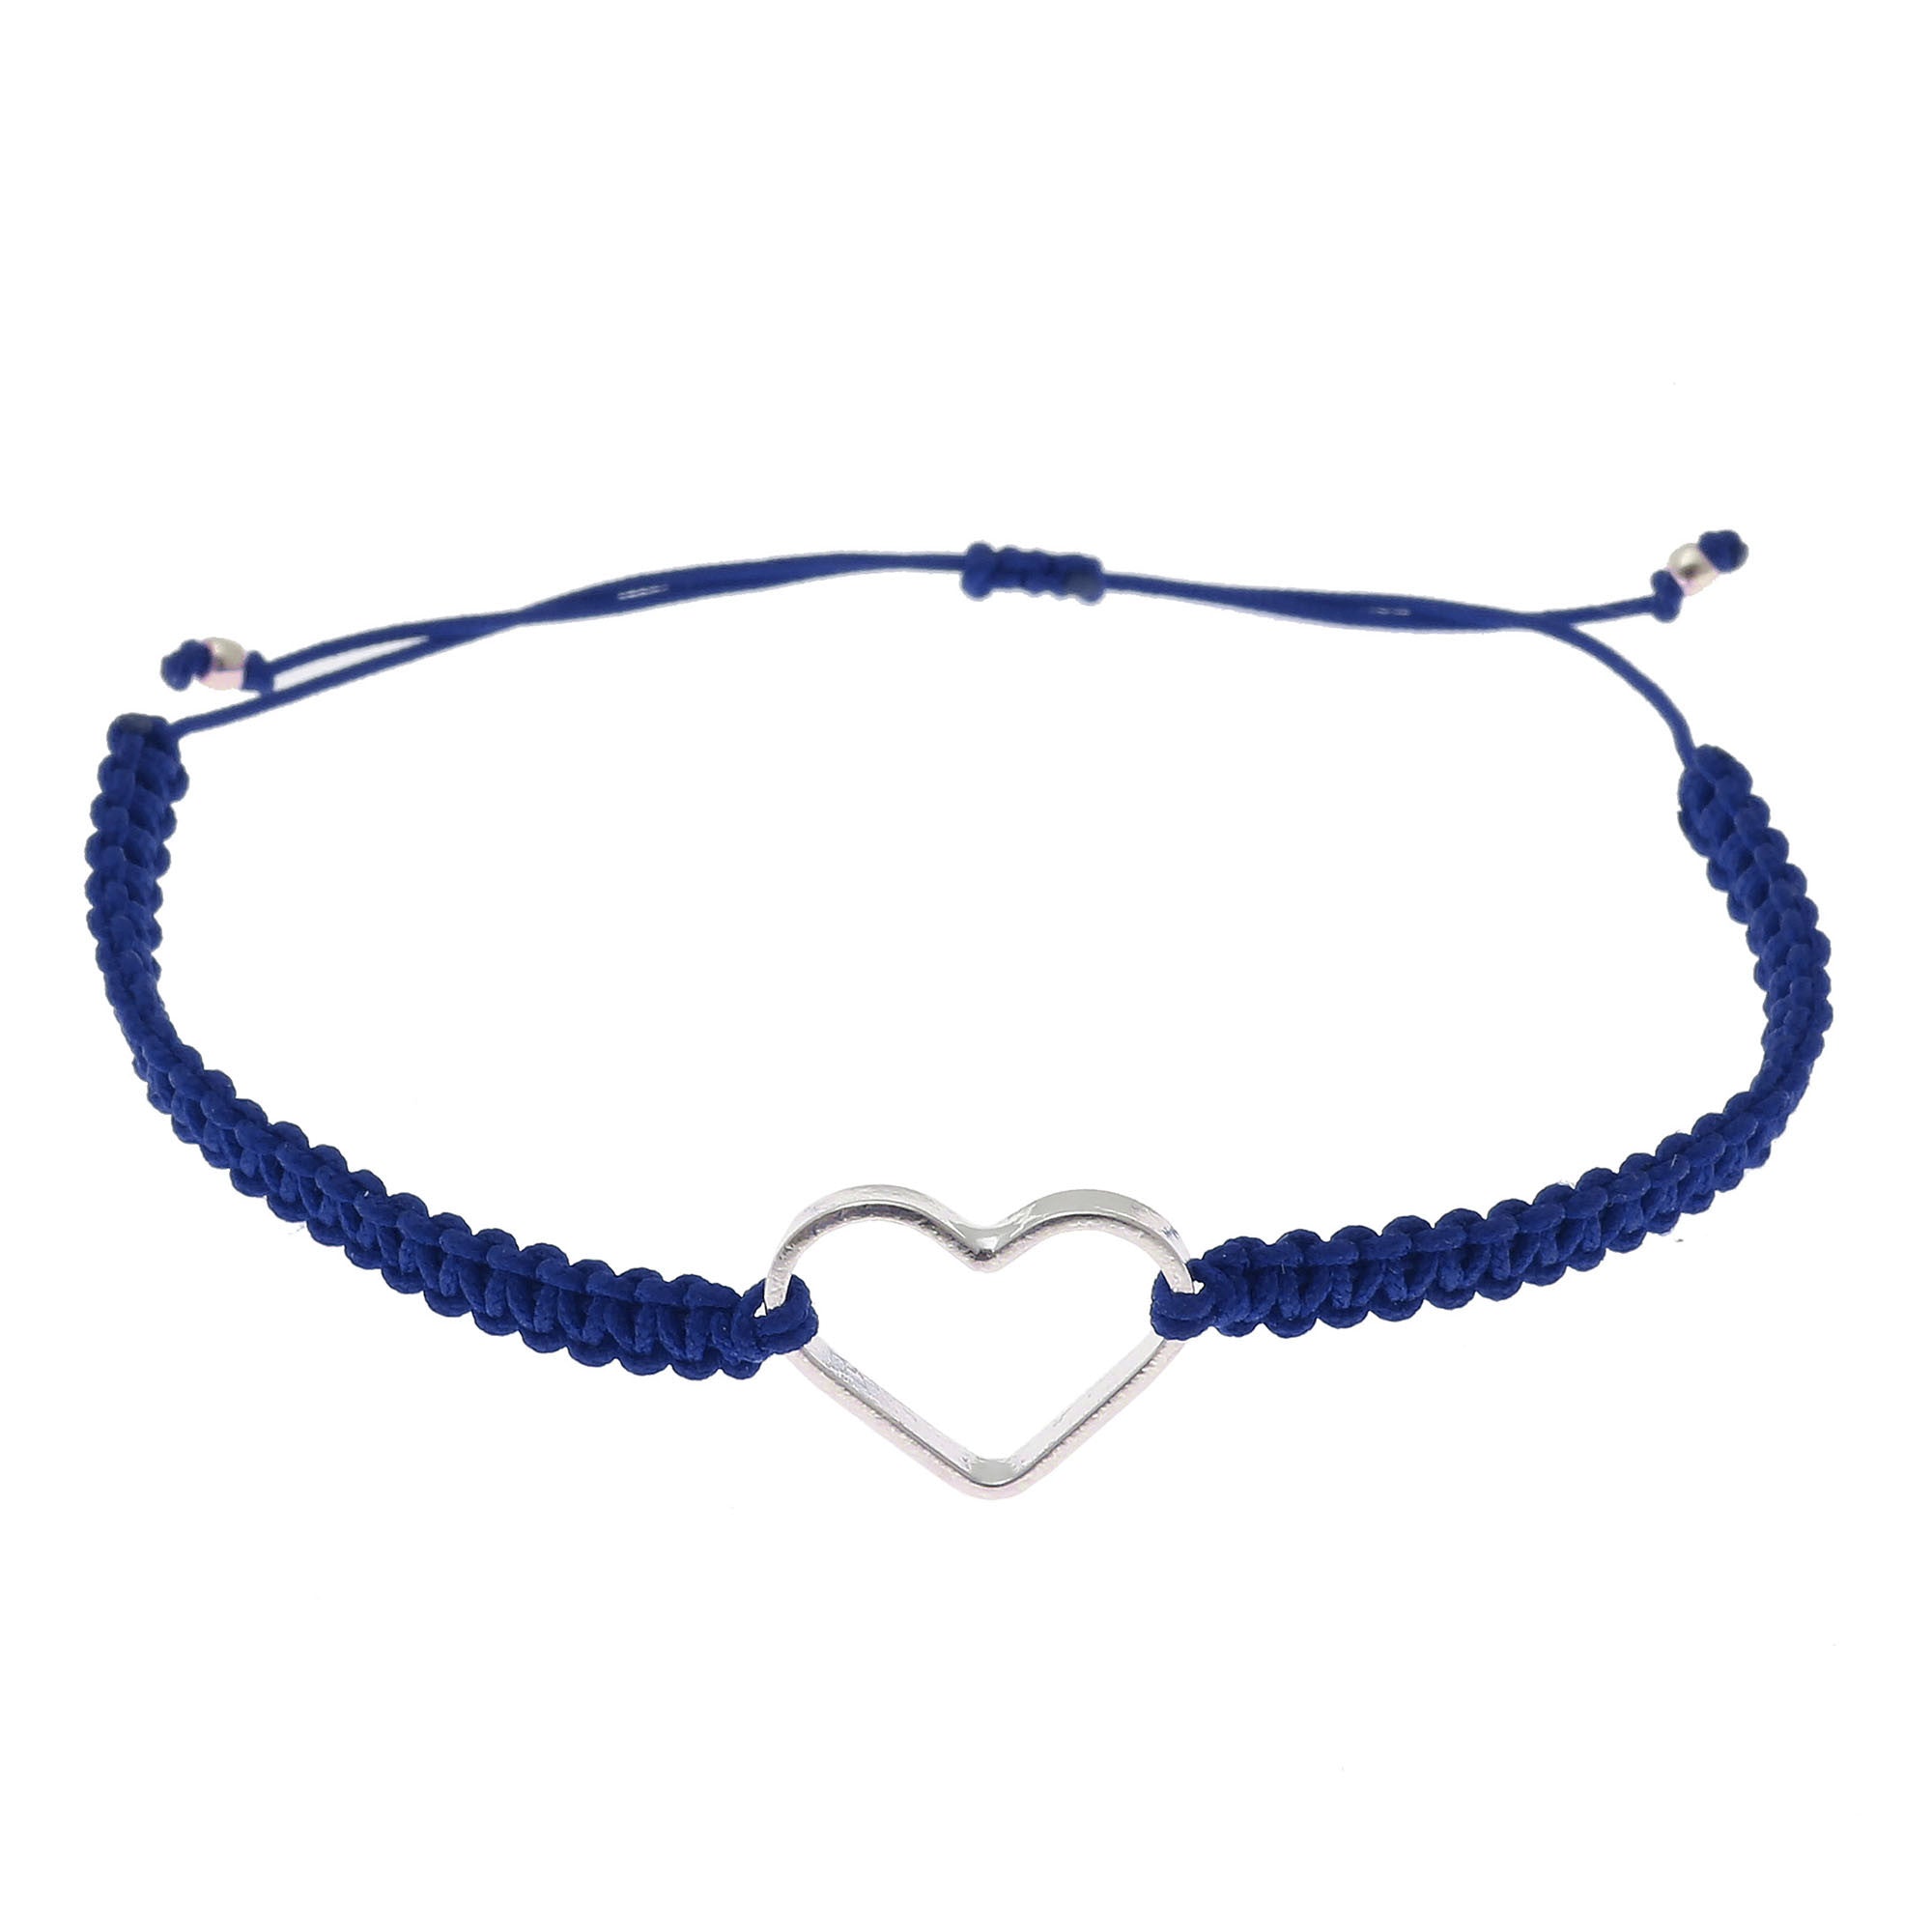 Bracelets | Gold, Silver & Statement Heart Accessories | SEEME.ORG ...